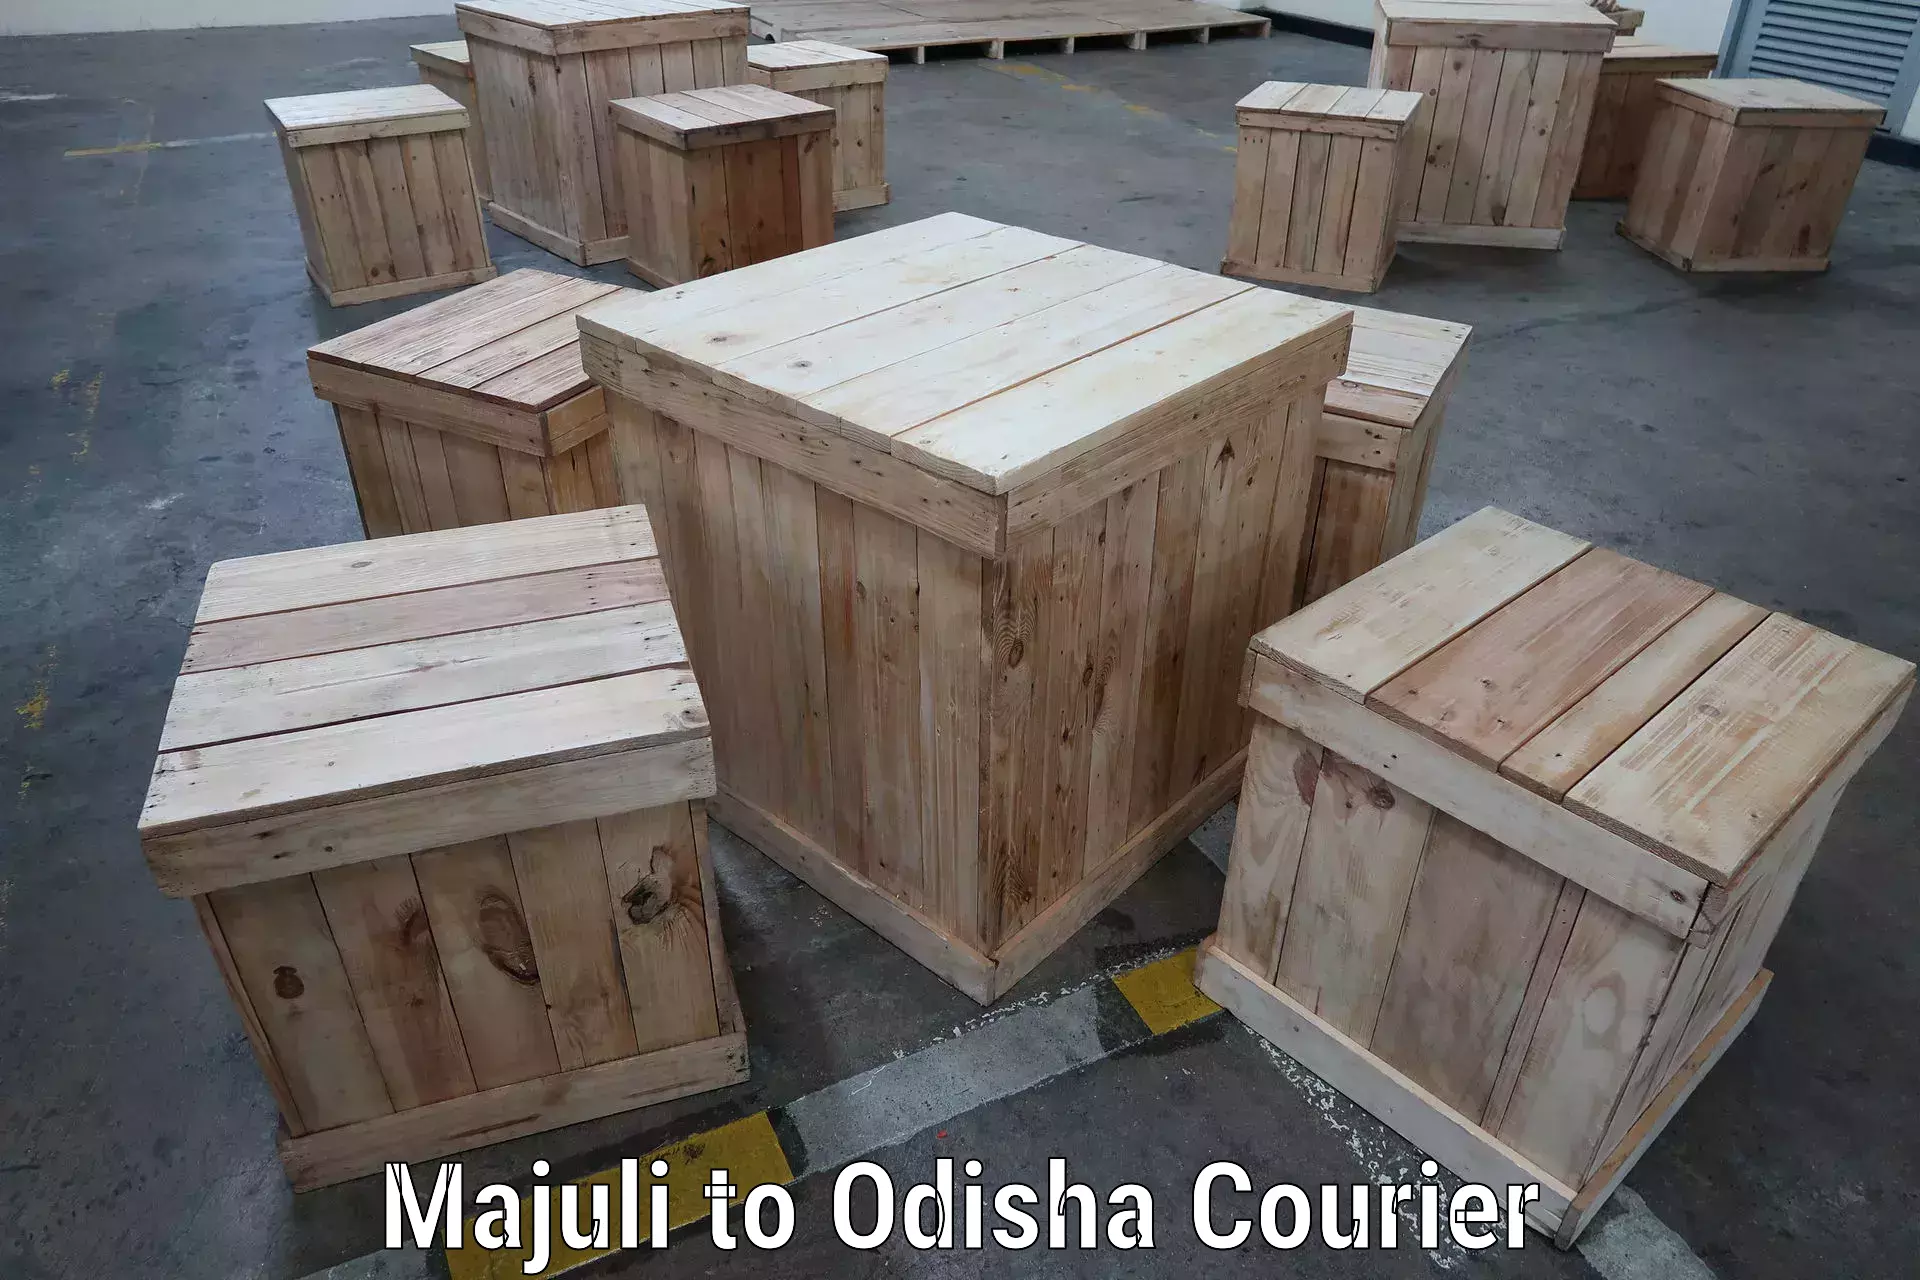 Sustainable shipping practices Majuli to Tihidi